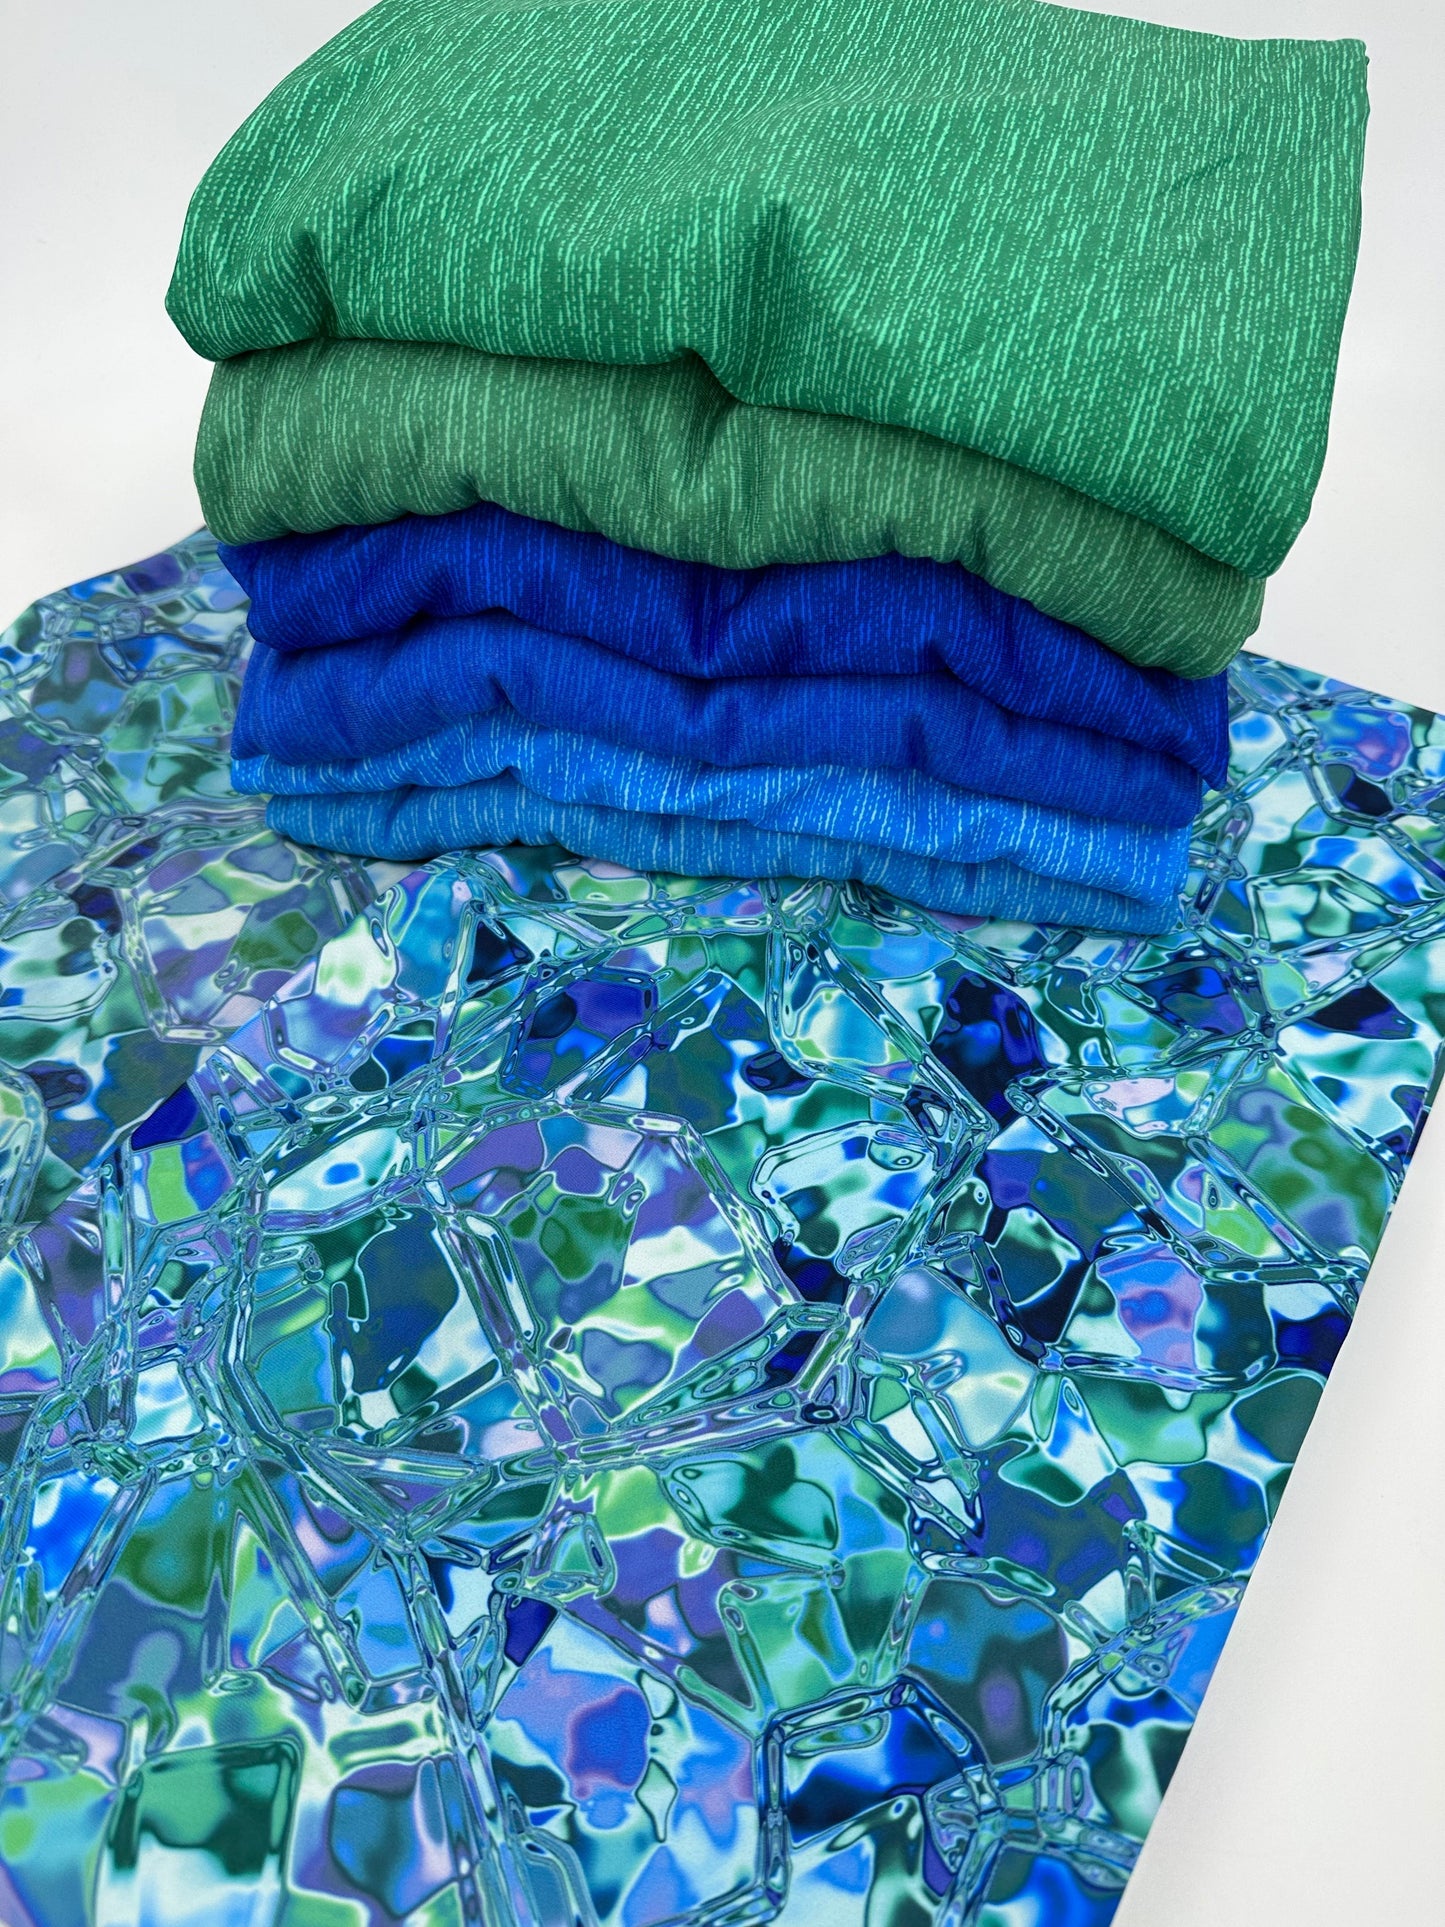 ABP: Sea Glass (Less Vibrant Coloring)